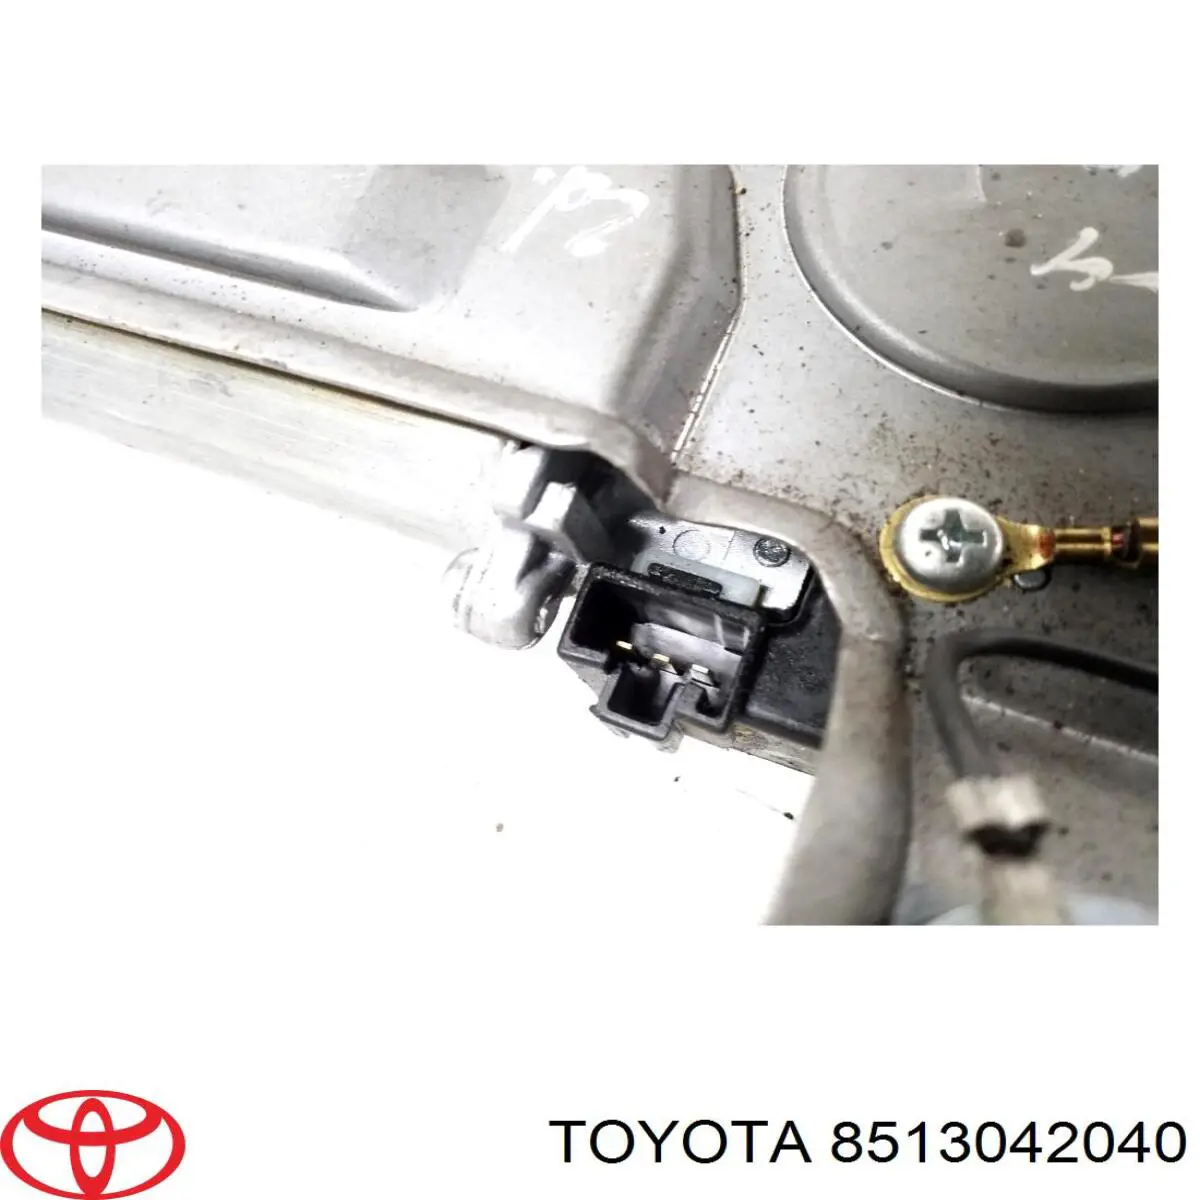 8513042040 Toyota motor limpiaparabrisas, trasera